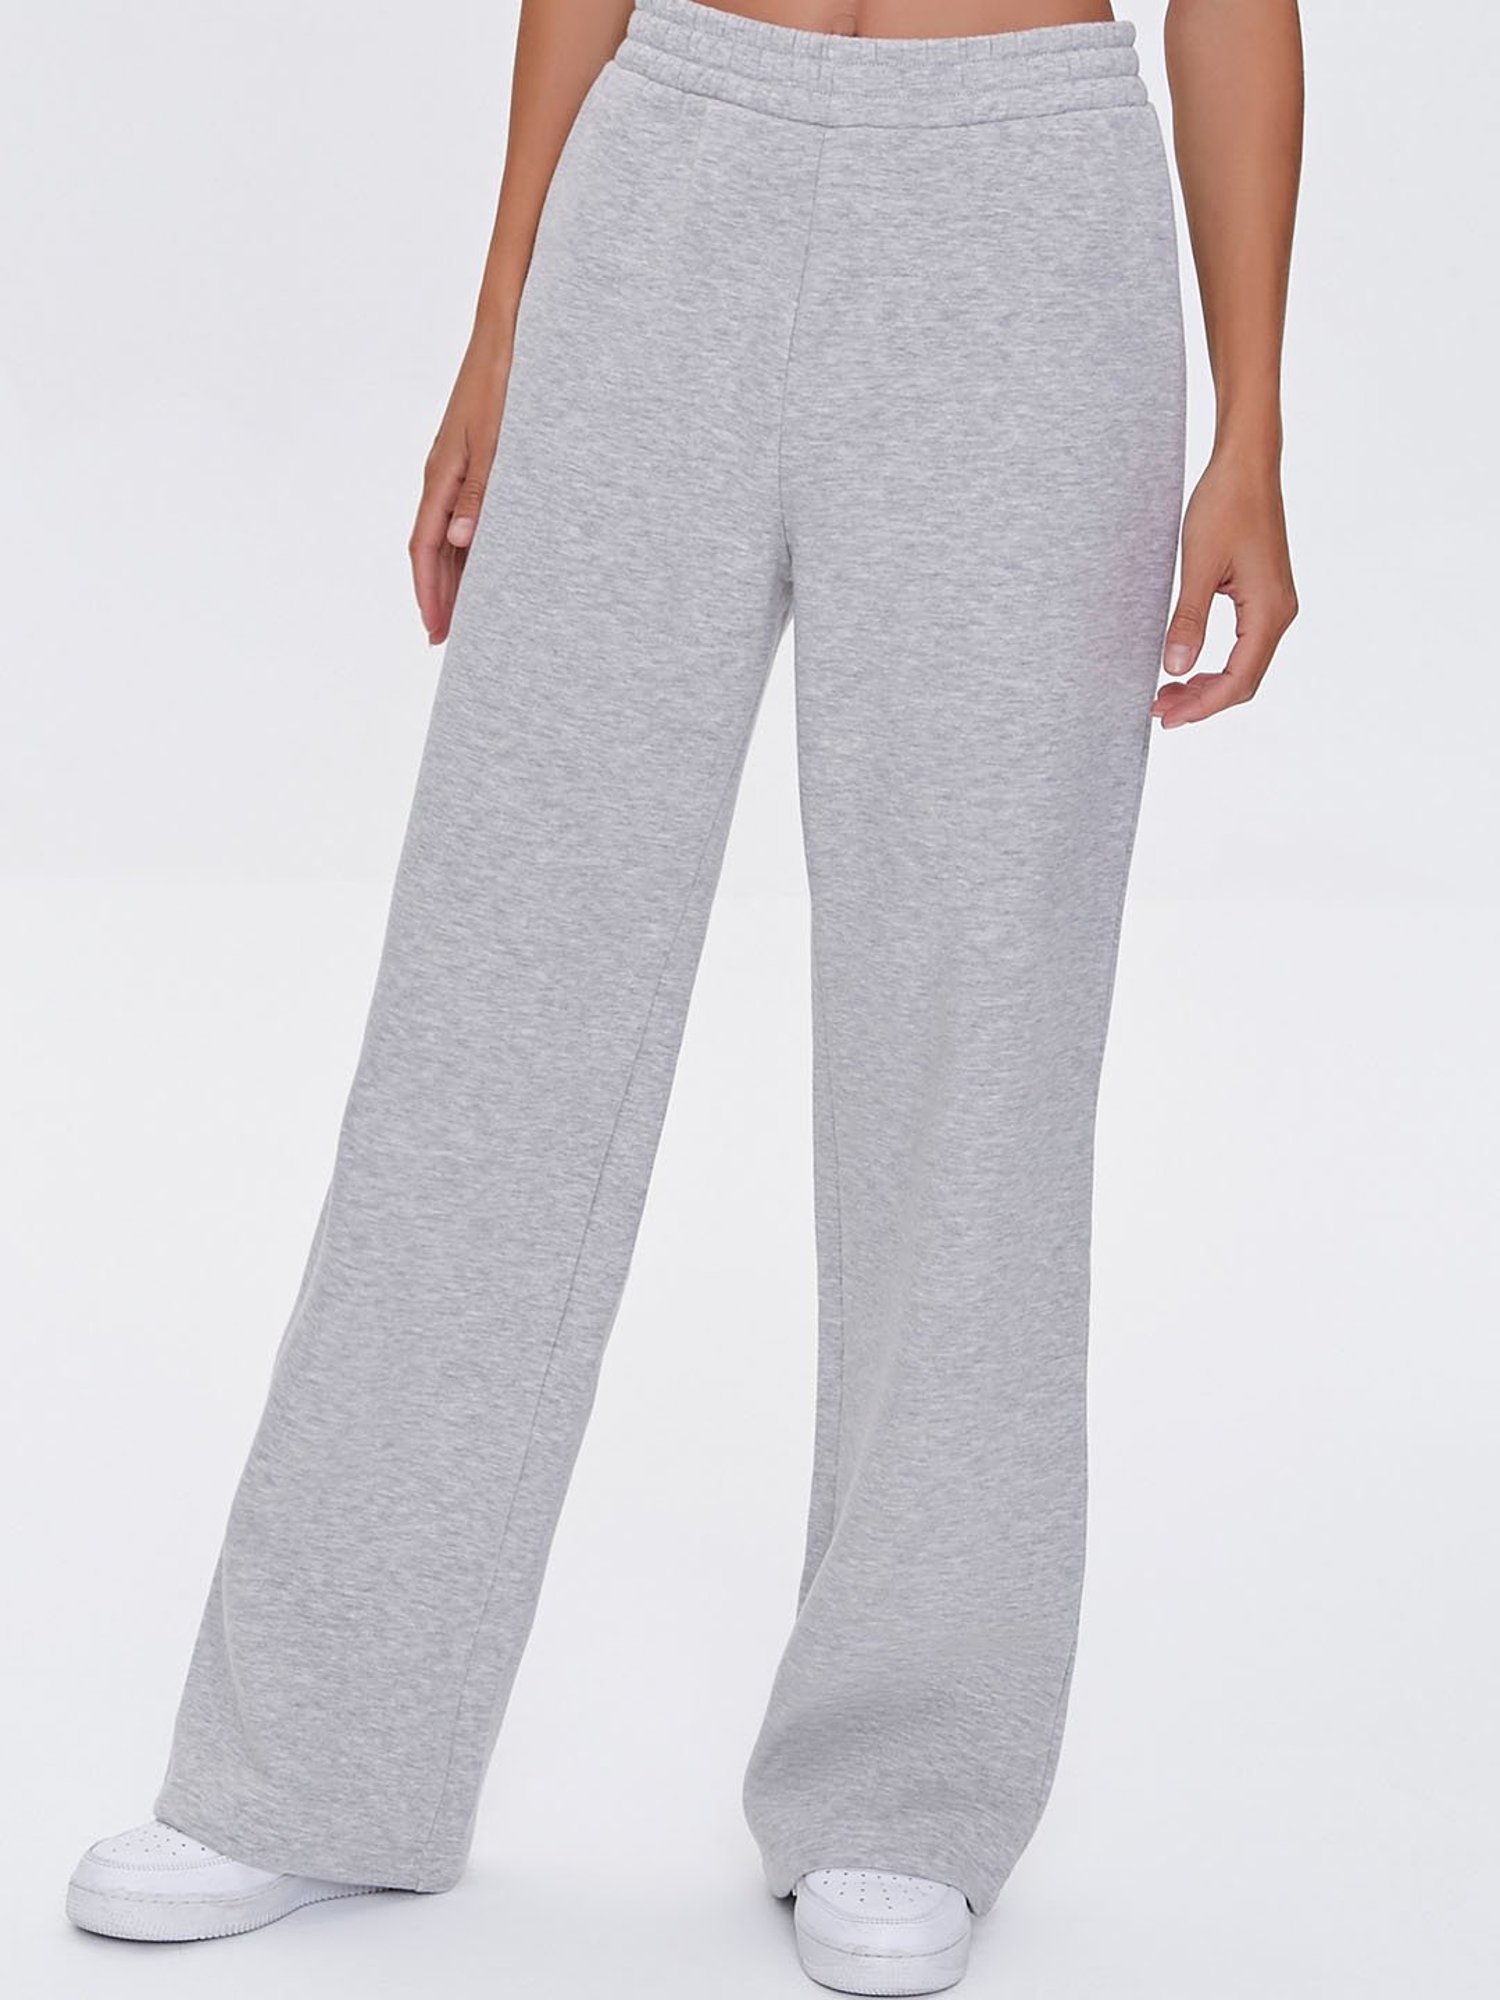 Buy Women Grey Side Chain Slit Jeans Online at Sassafras